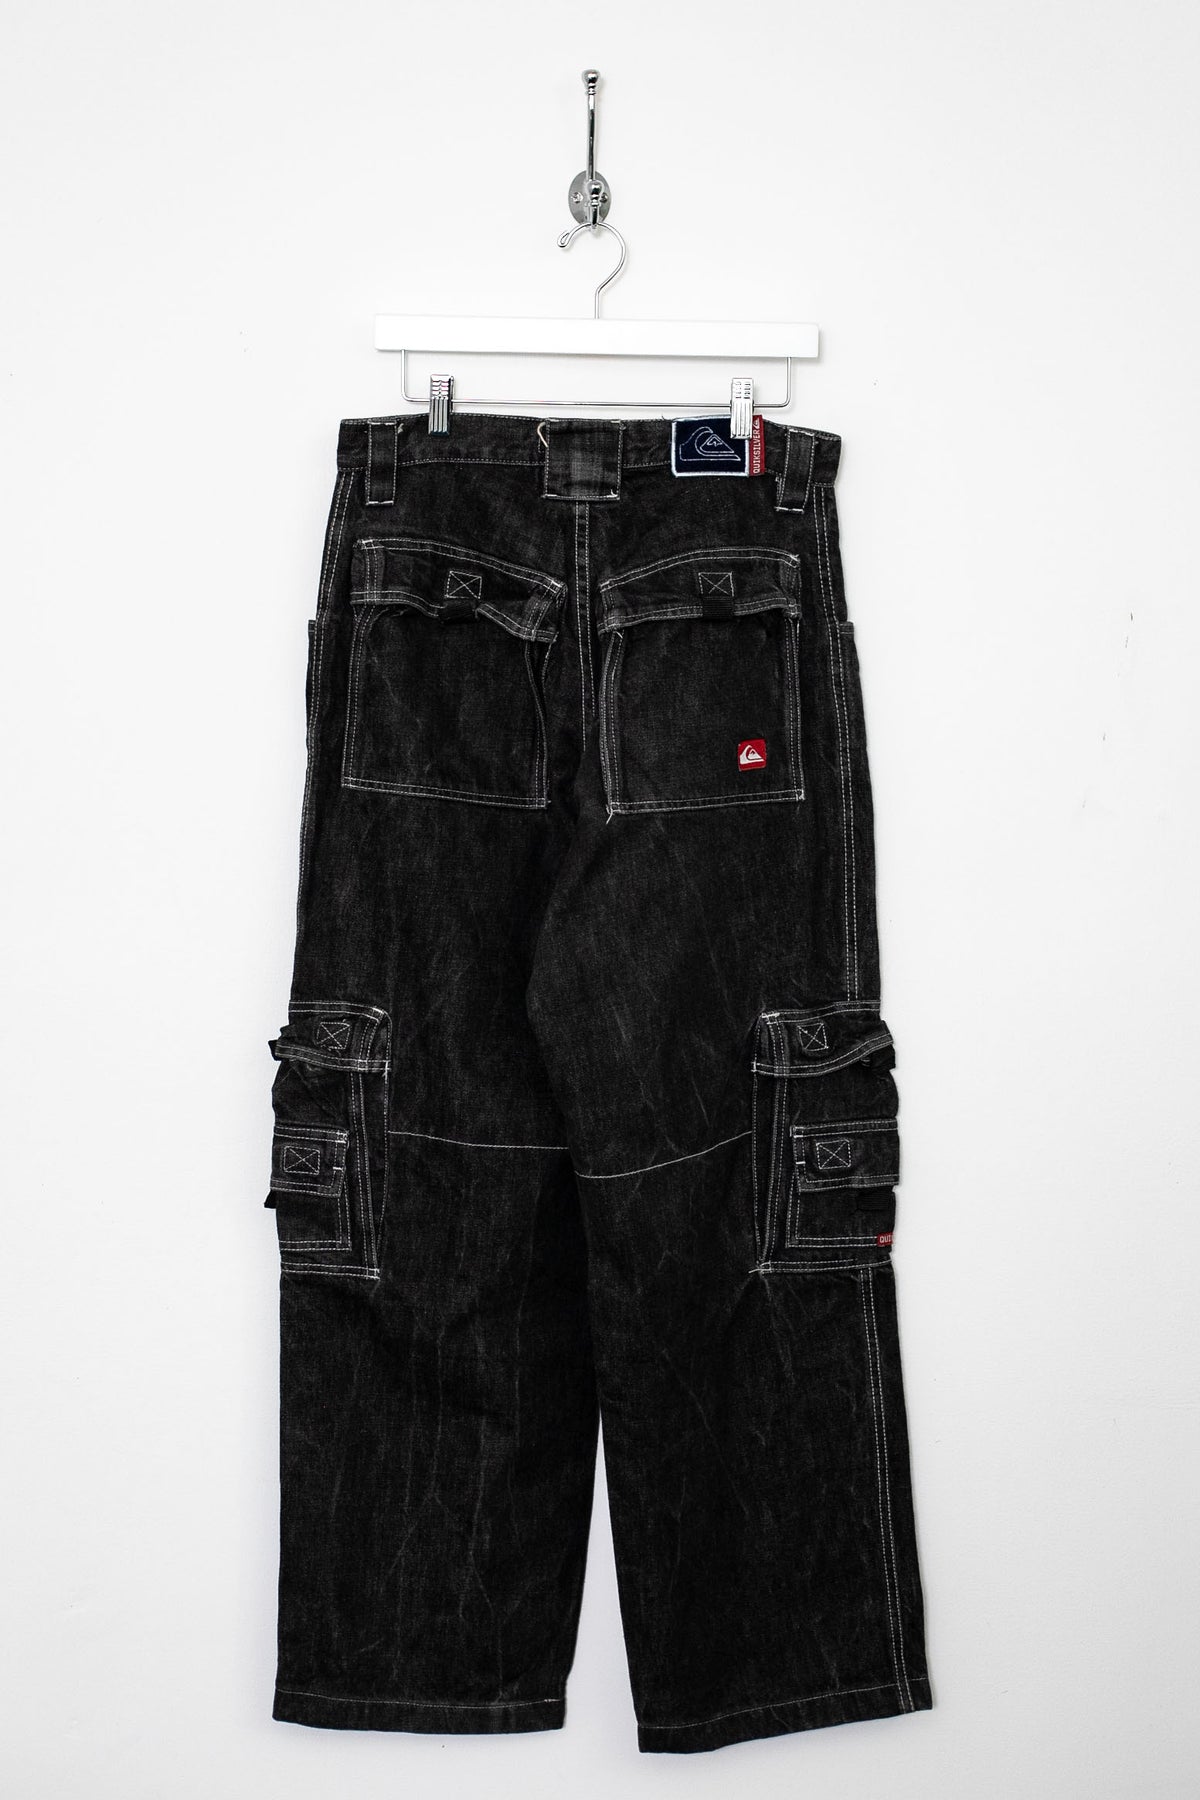 90s Quicksilver Cargo Jeans (M)